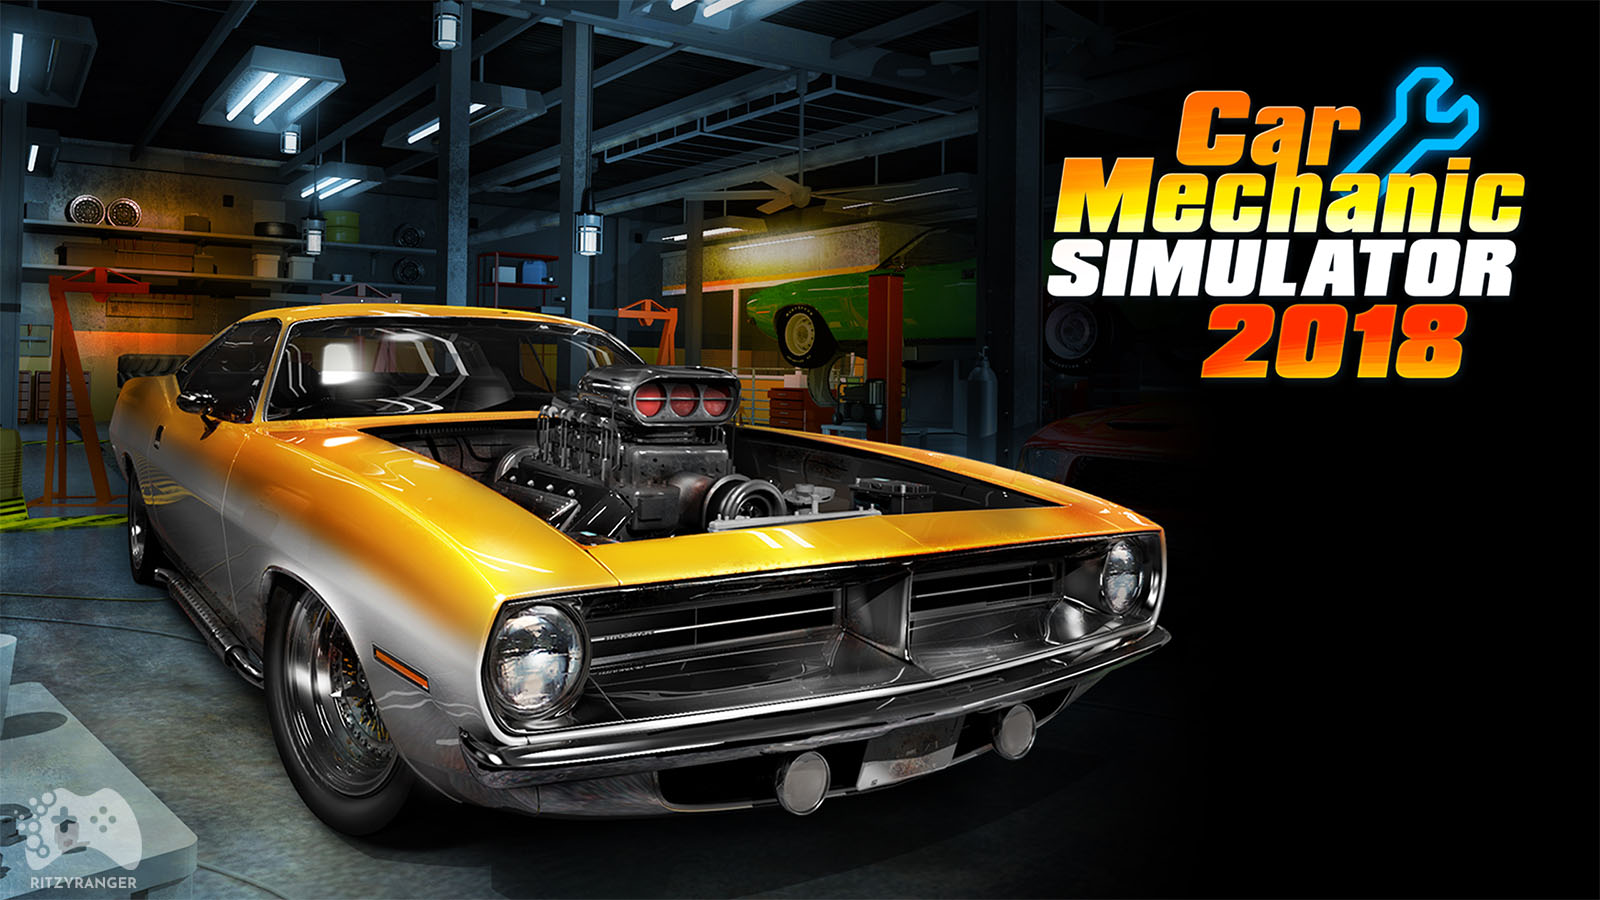 Car Mechanic Simulator 2018 za darmo w Epic Games Store